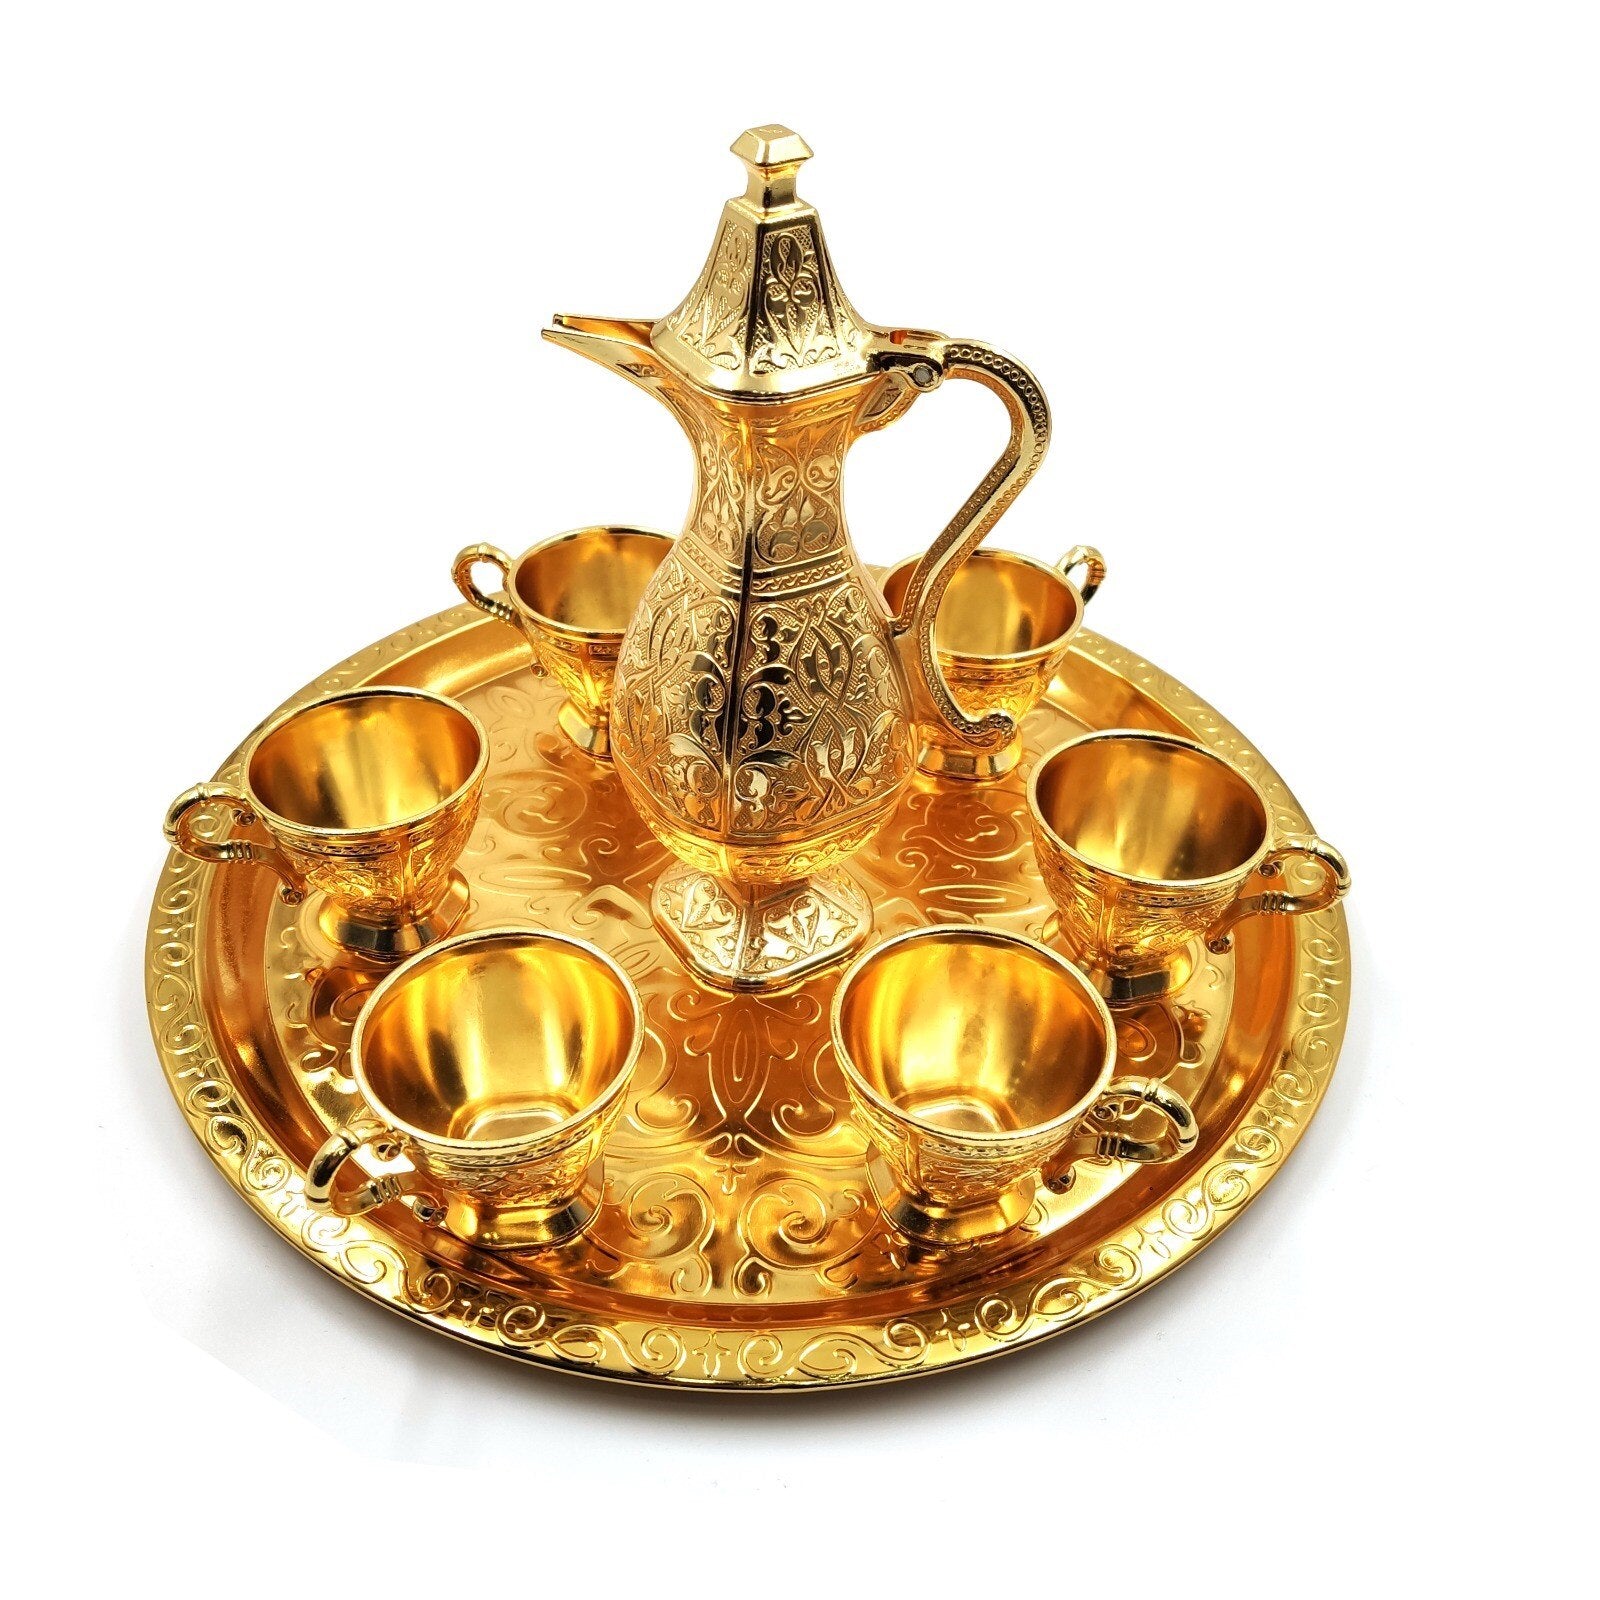 Drinking of Zamzam Set Silver Marbled Plated Tray Cups Islamic eid al adha gift